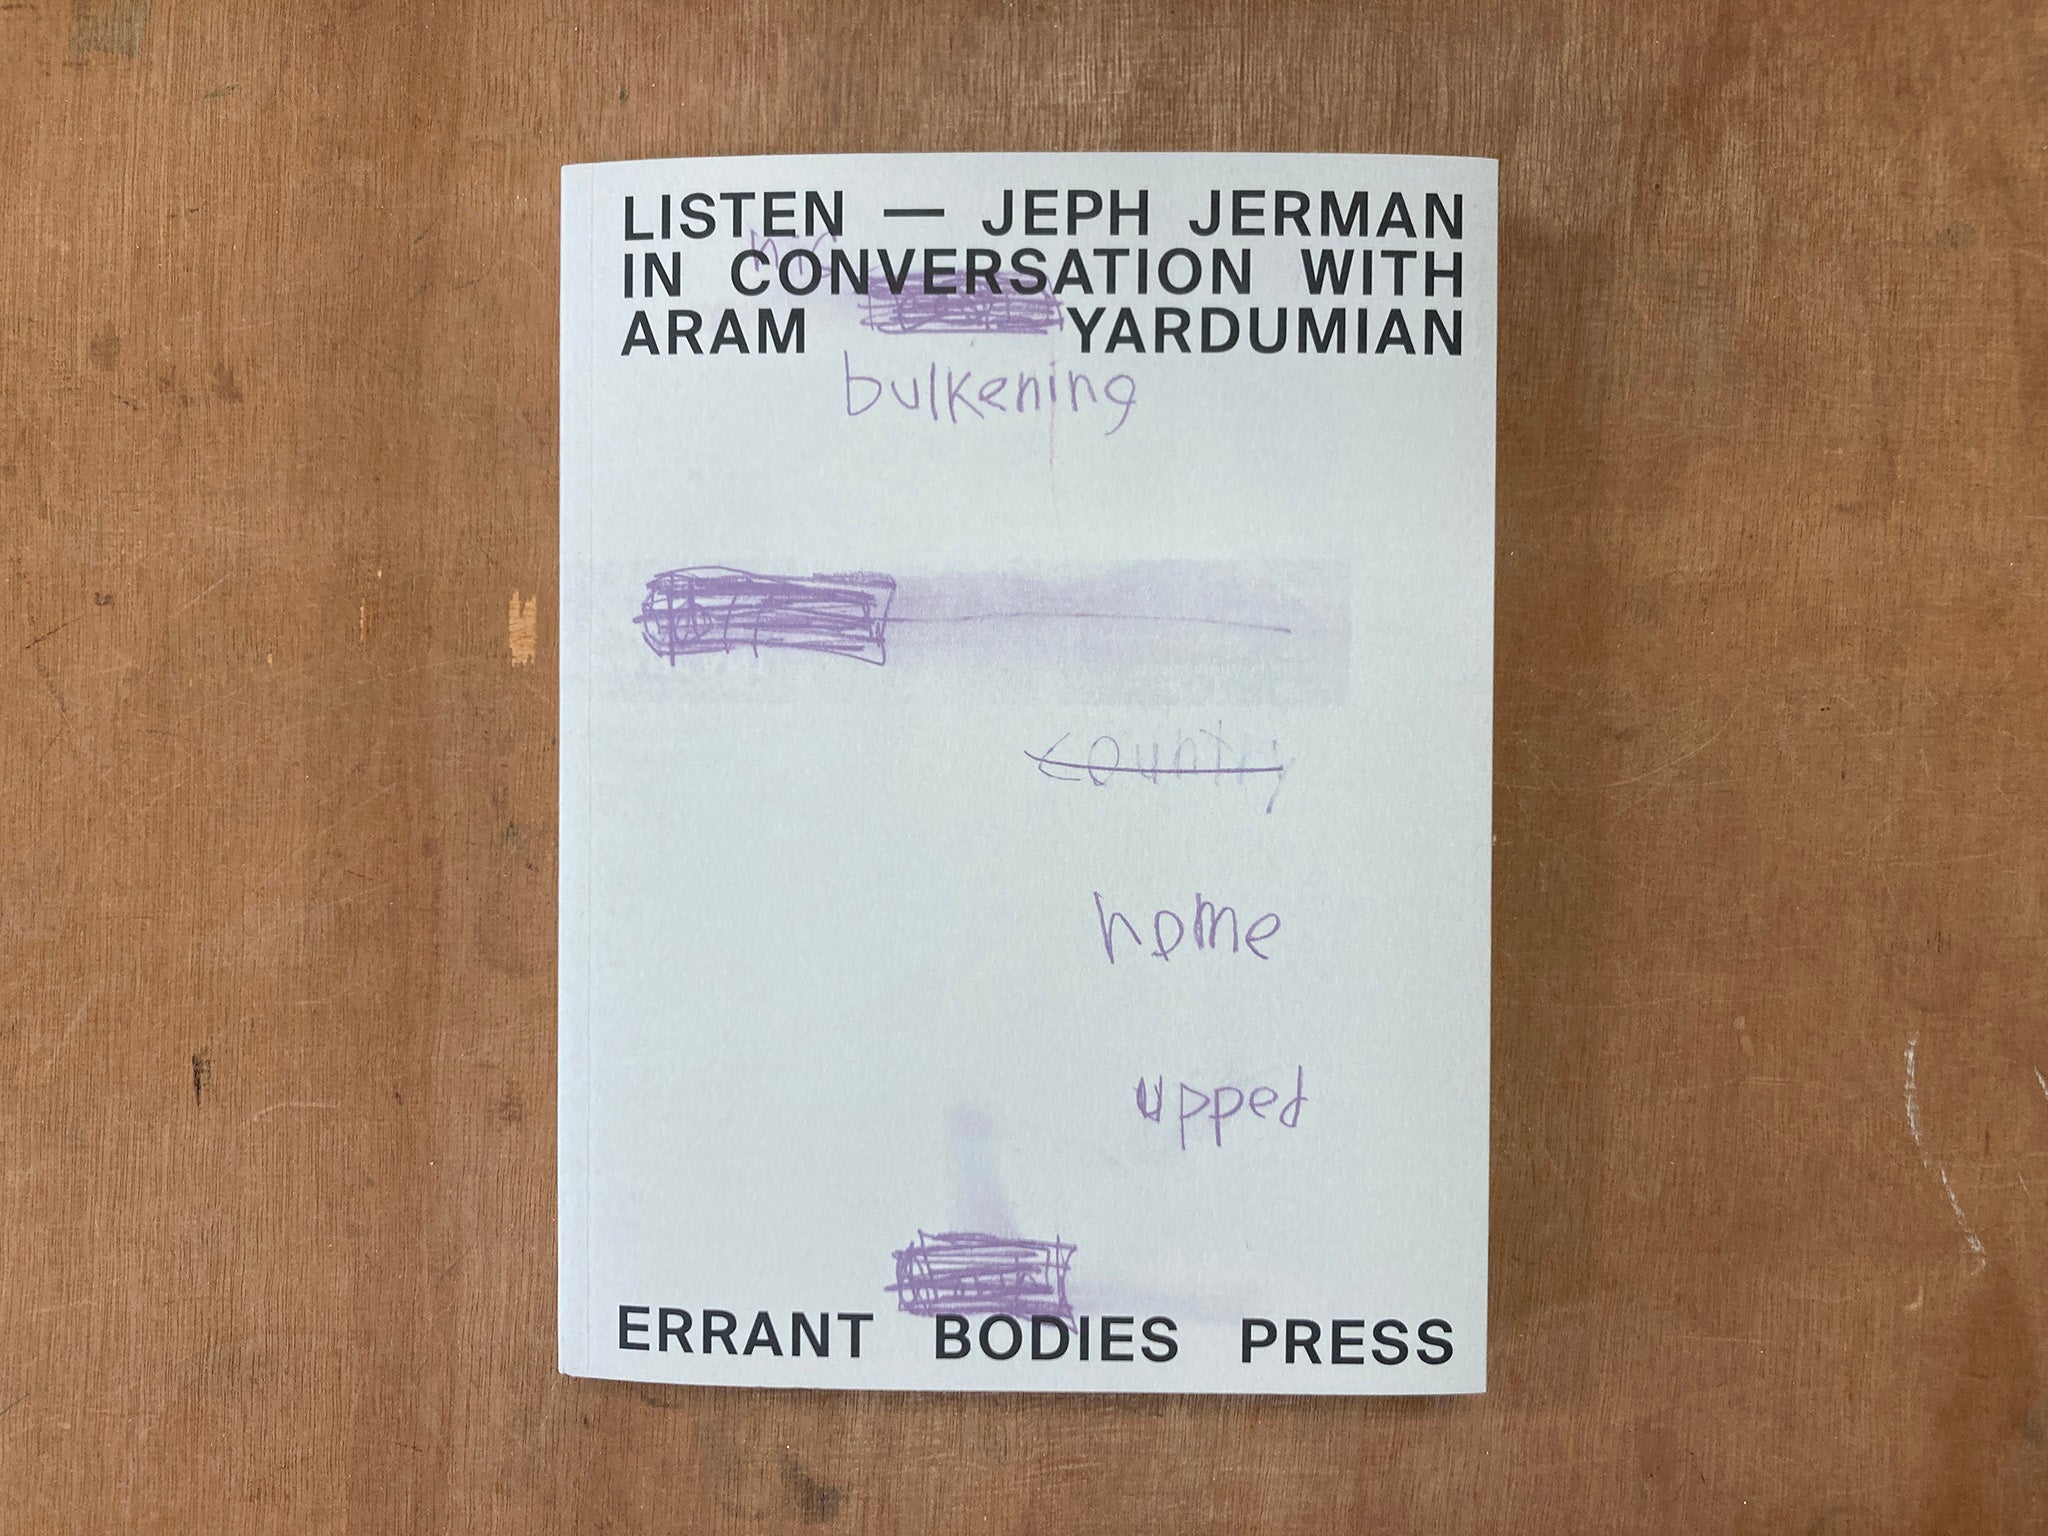 LISTEN – JEPH JERMAN IN CONVERSATION WITH ARAM YARDUMIAN